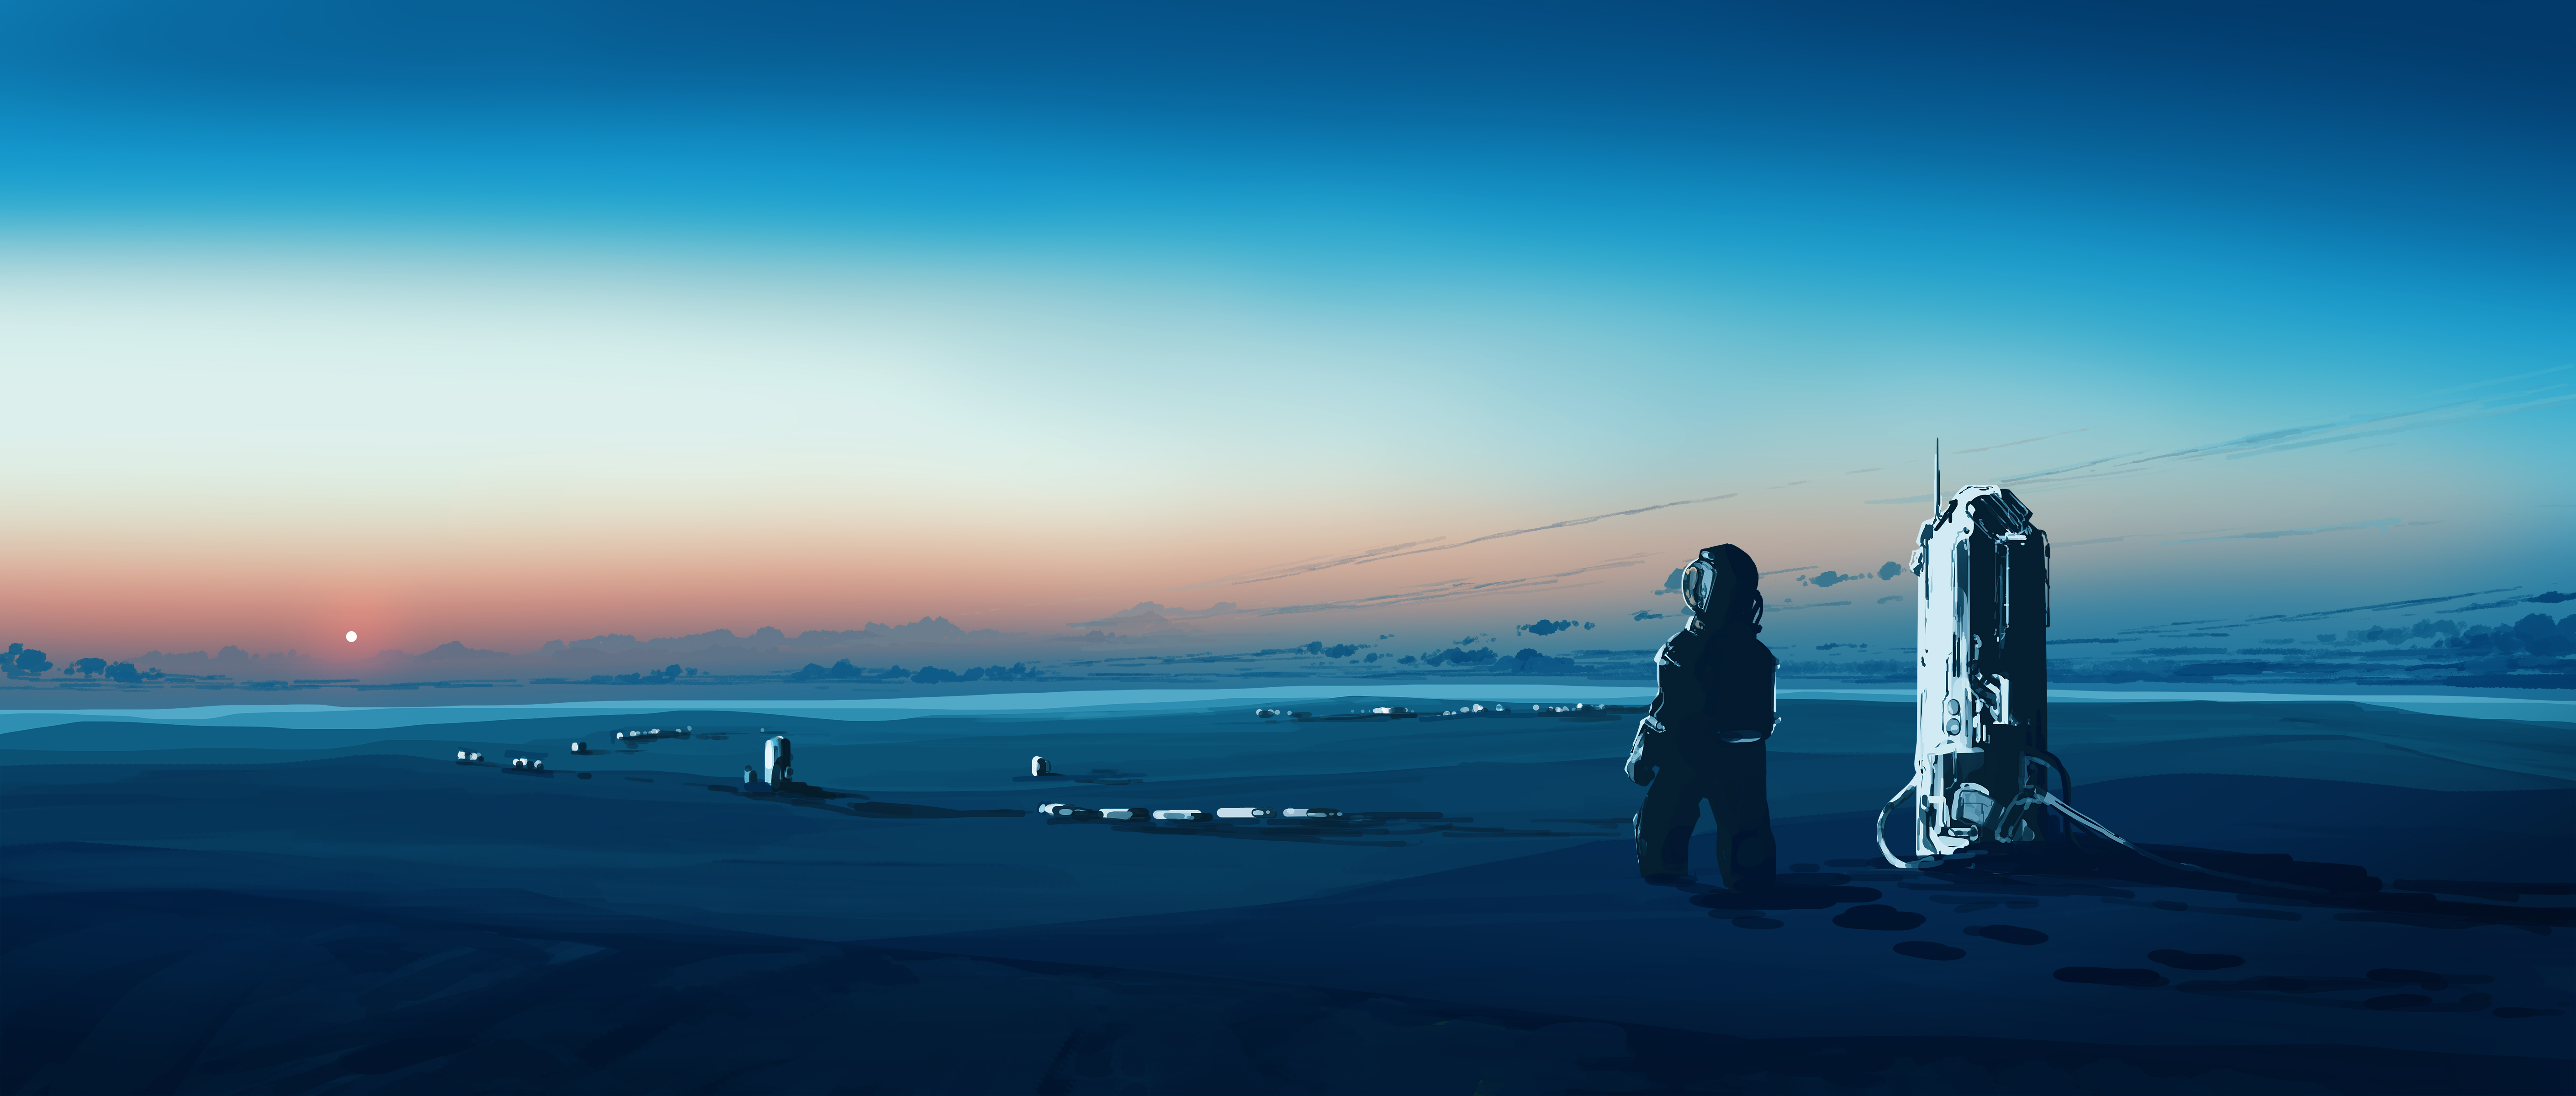 Anime Anime Sky Astronaut Spacesuit Spaceship Minimalism Sunset Sunset Glow 5640x2400